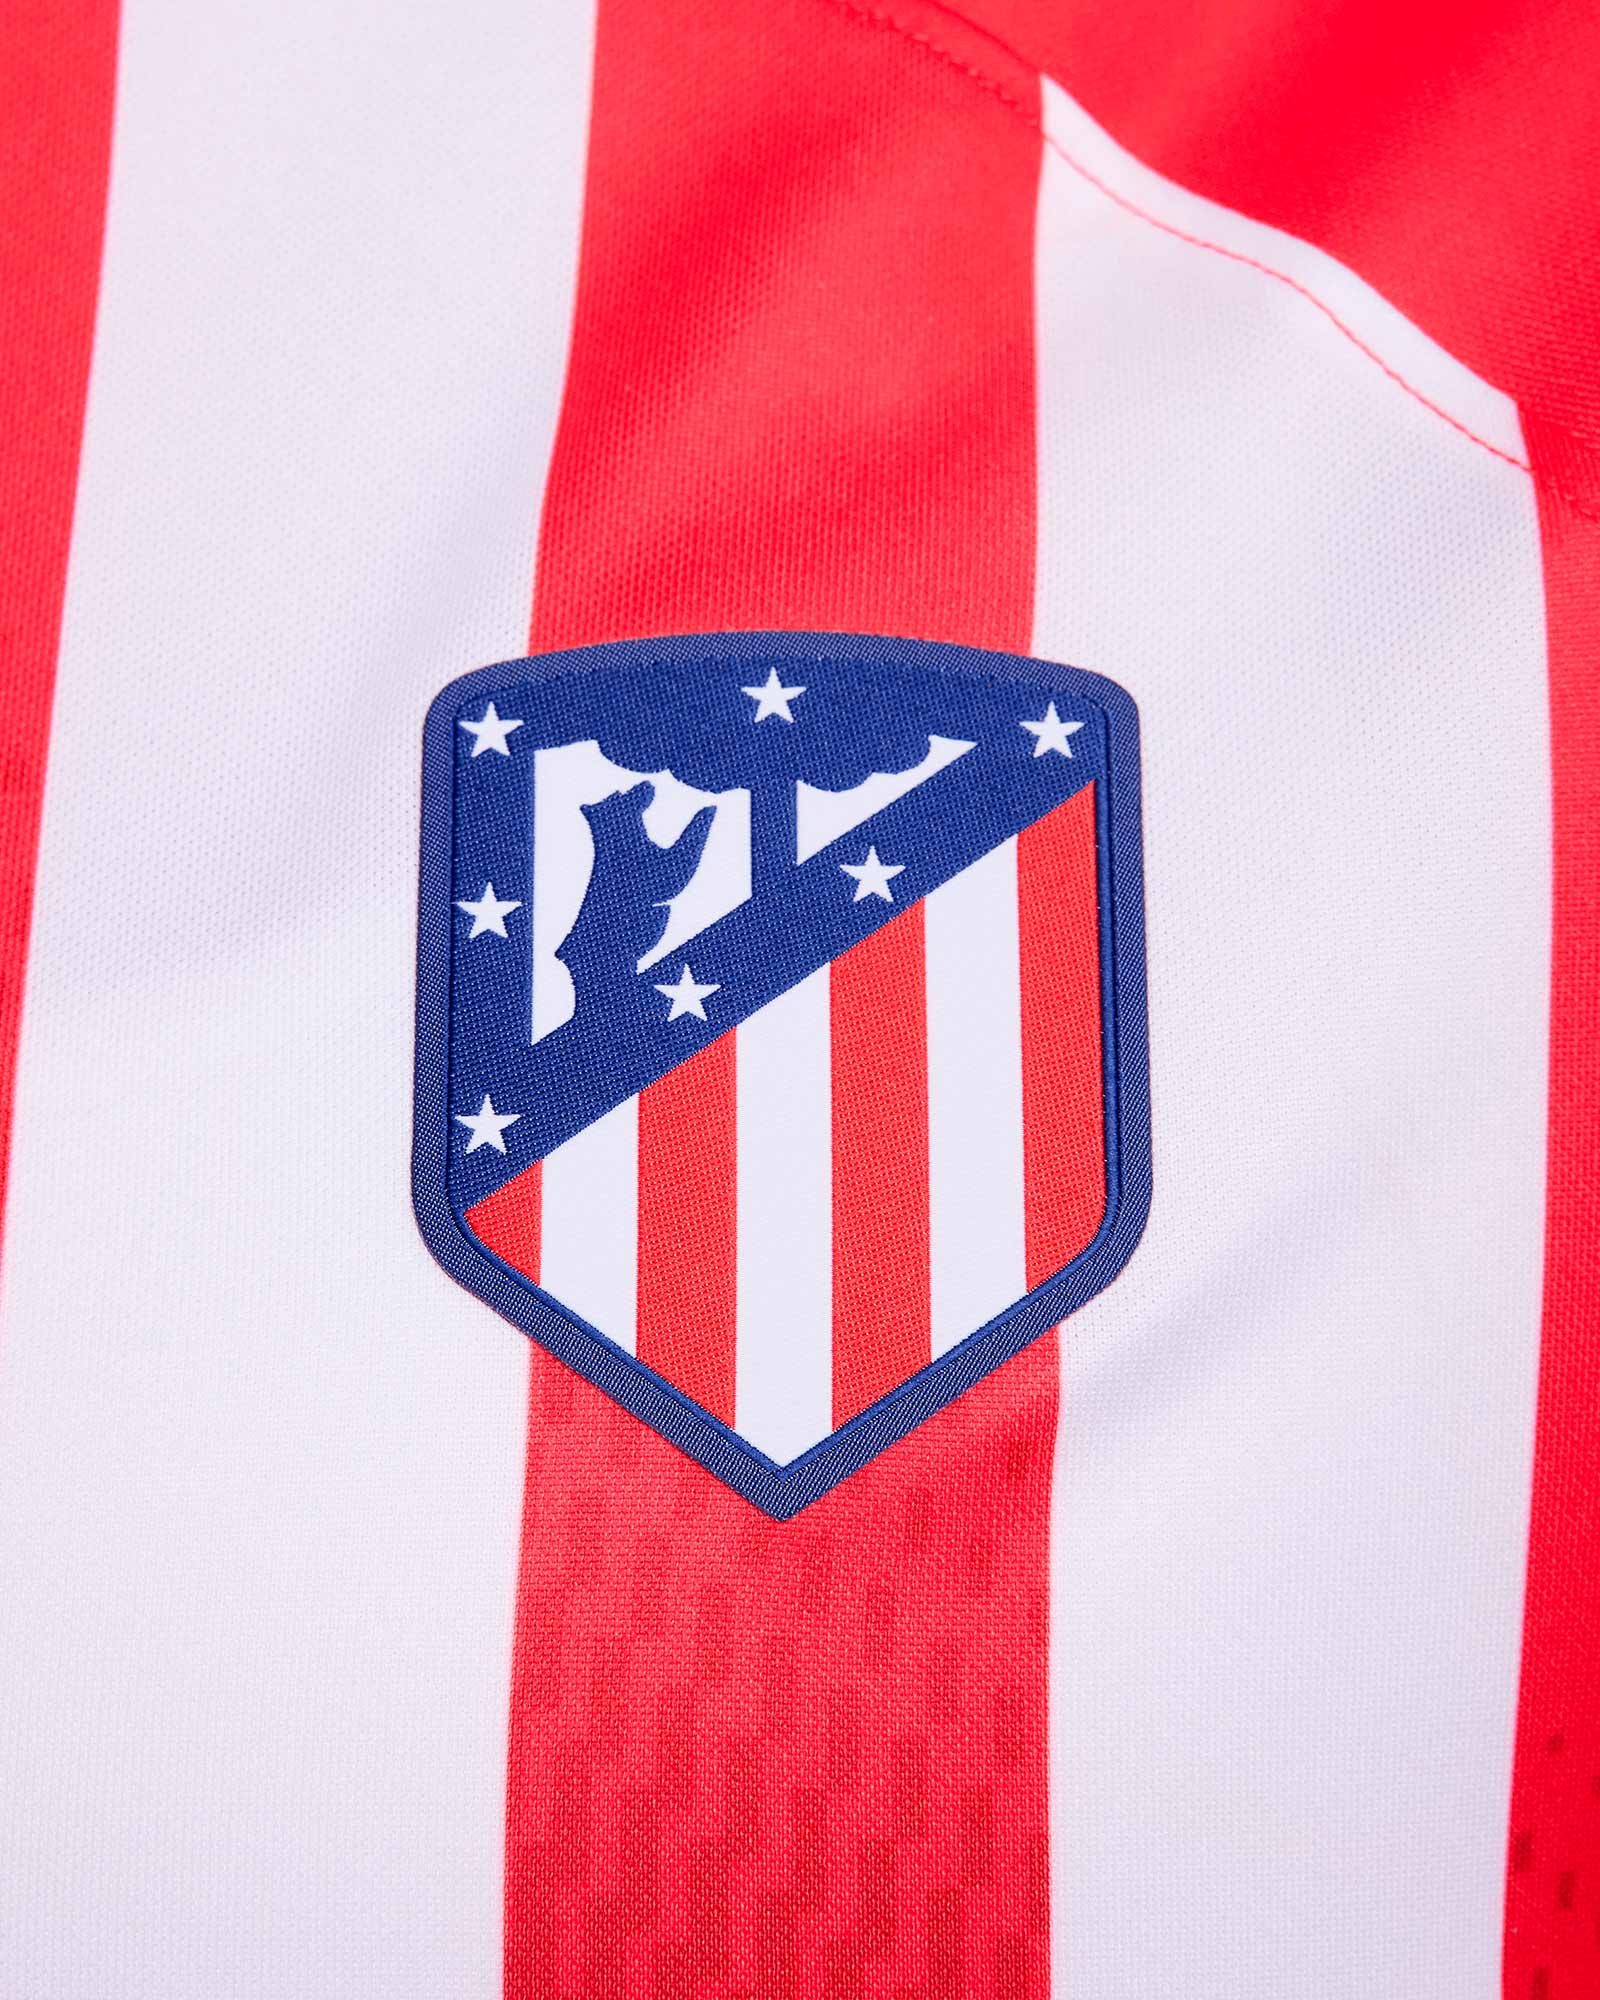 Camiseta 1ª Atlético de Madrid 2023/2024 M. Llorente - Fútbol Factory